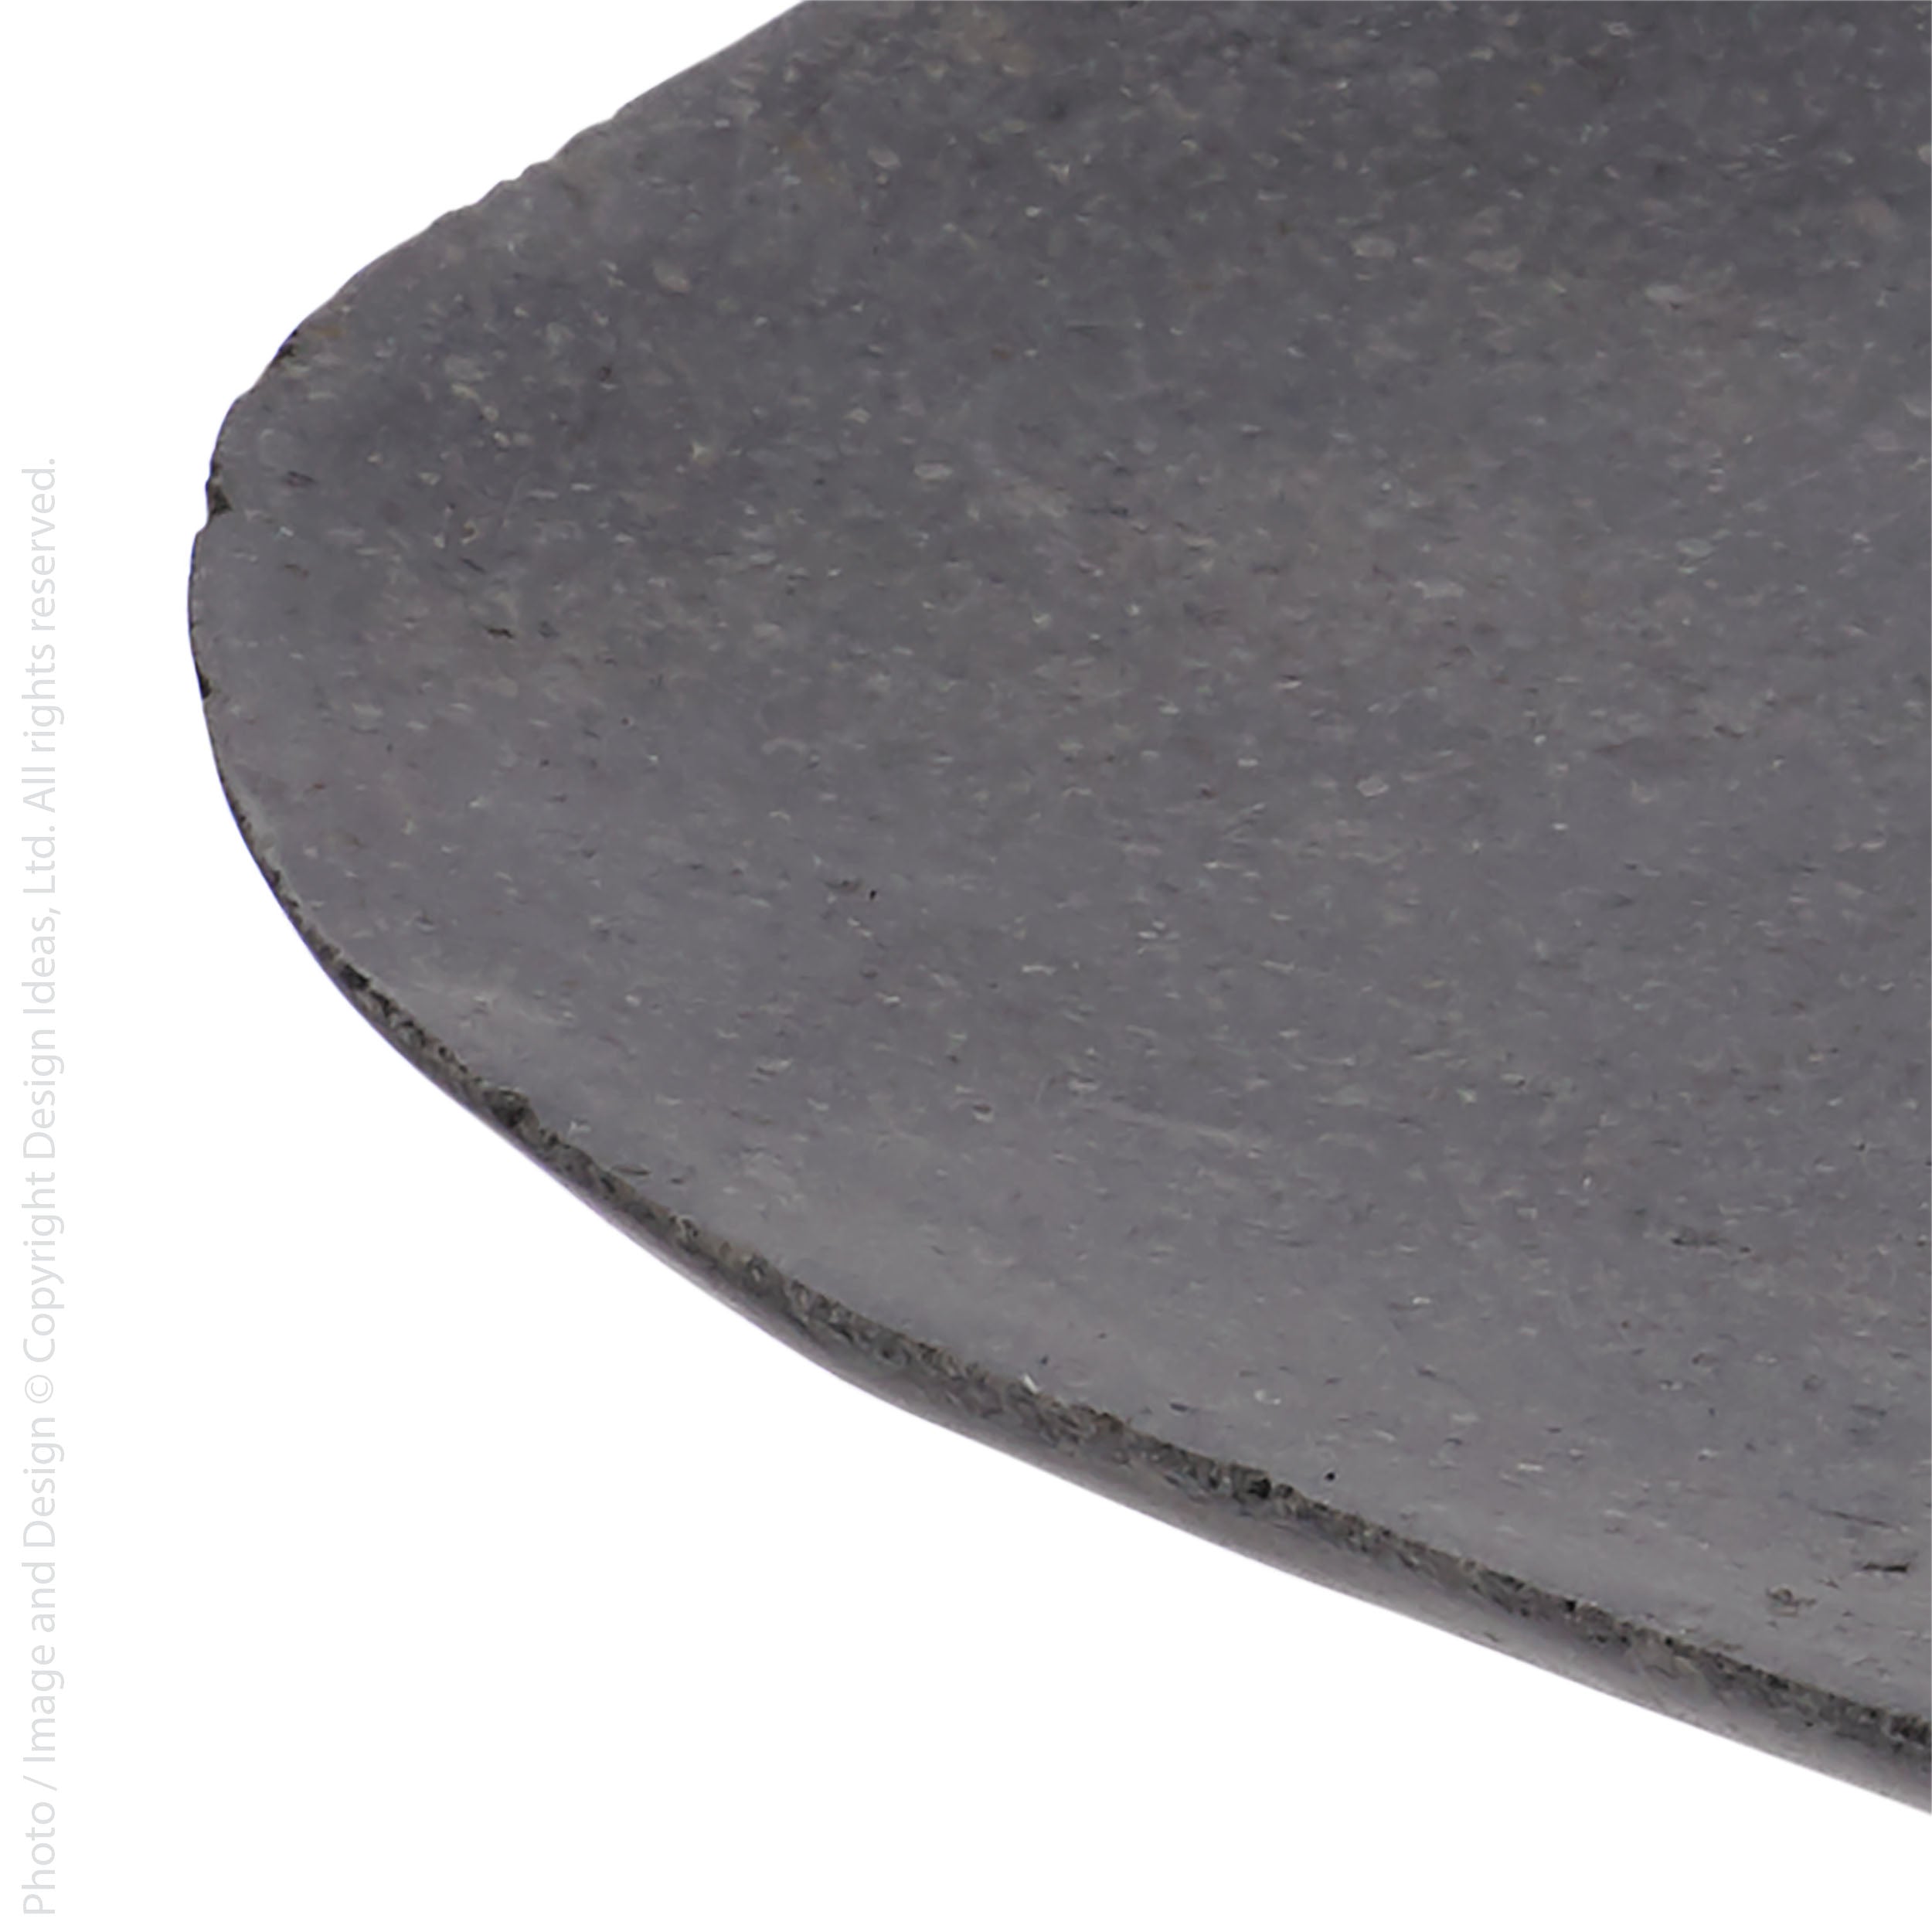 Stoneshard™ Carved Riverstone Platter (16 x 8 x 0.5 in.)